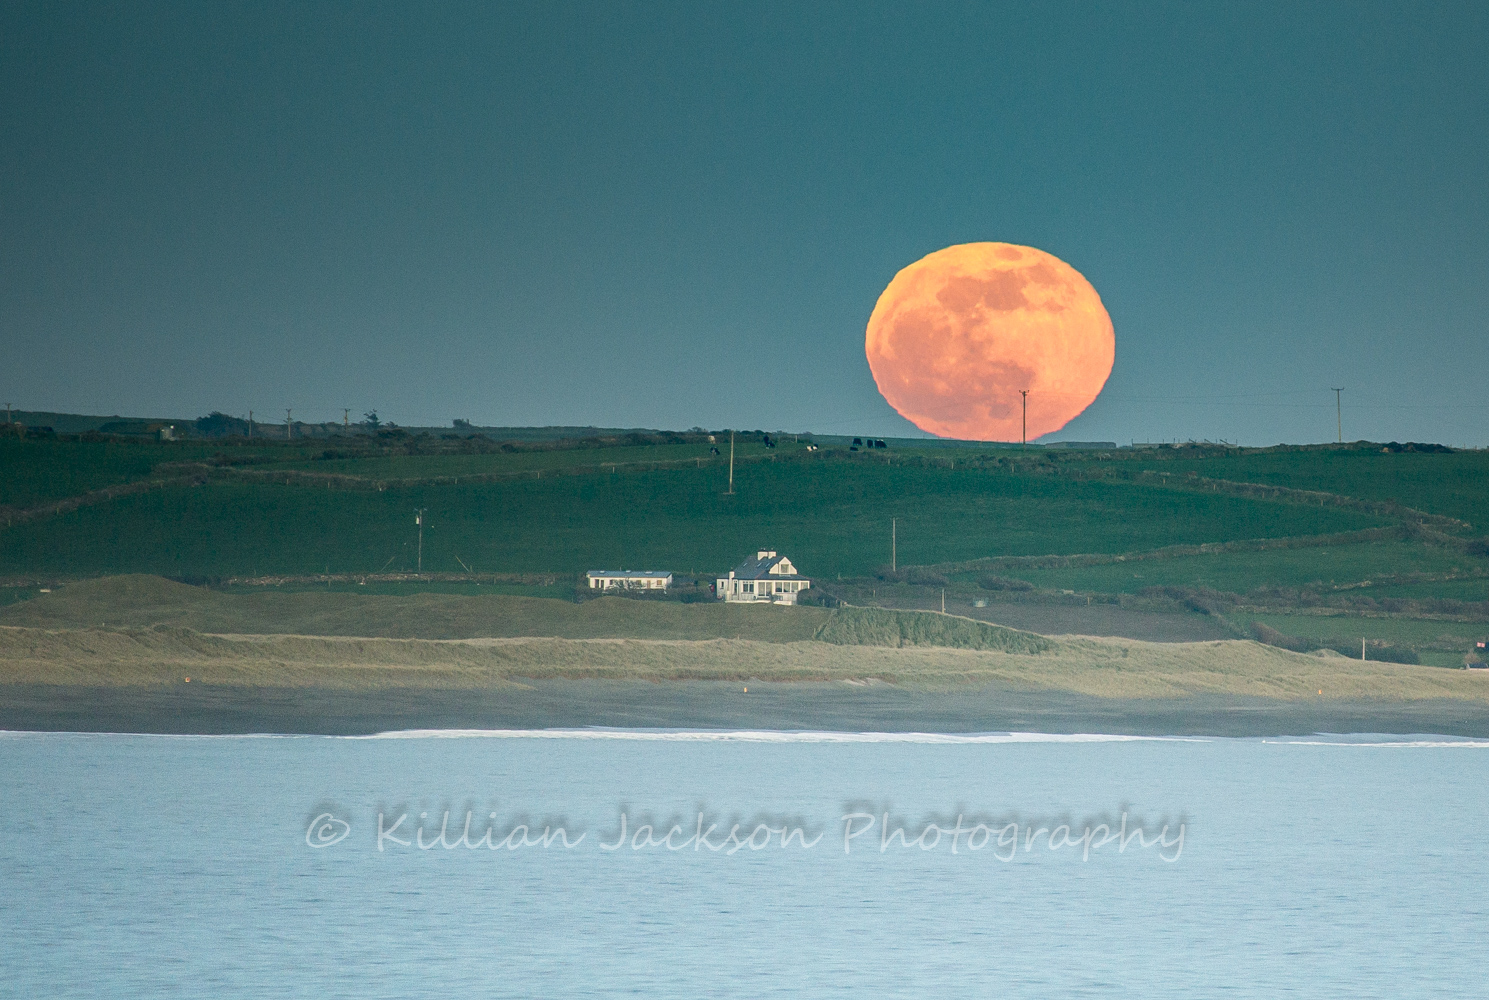 full moon, longstrand, west cork, cork, ireland, wild atlantic way